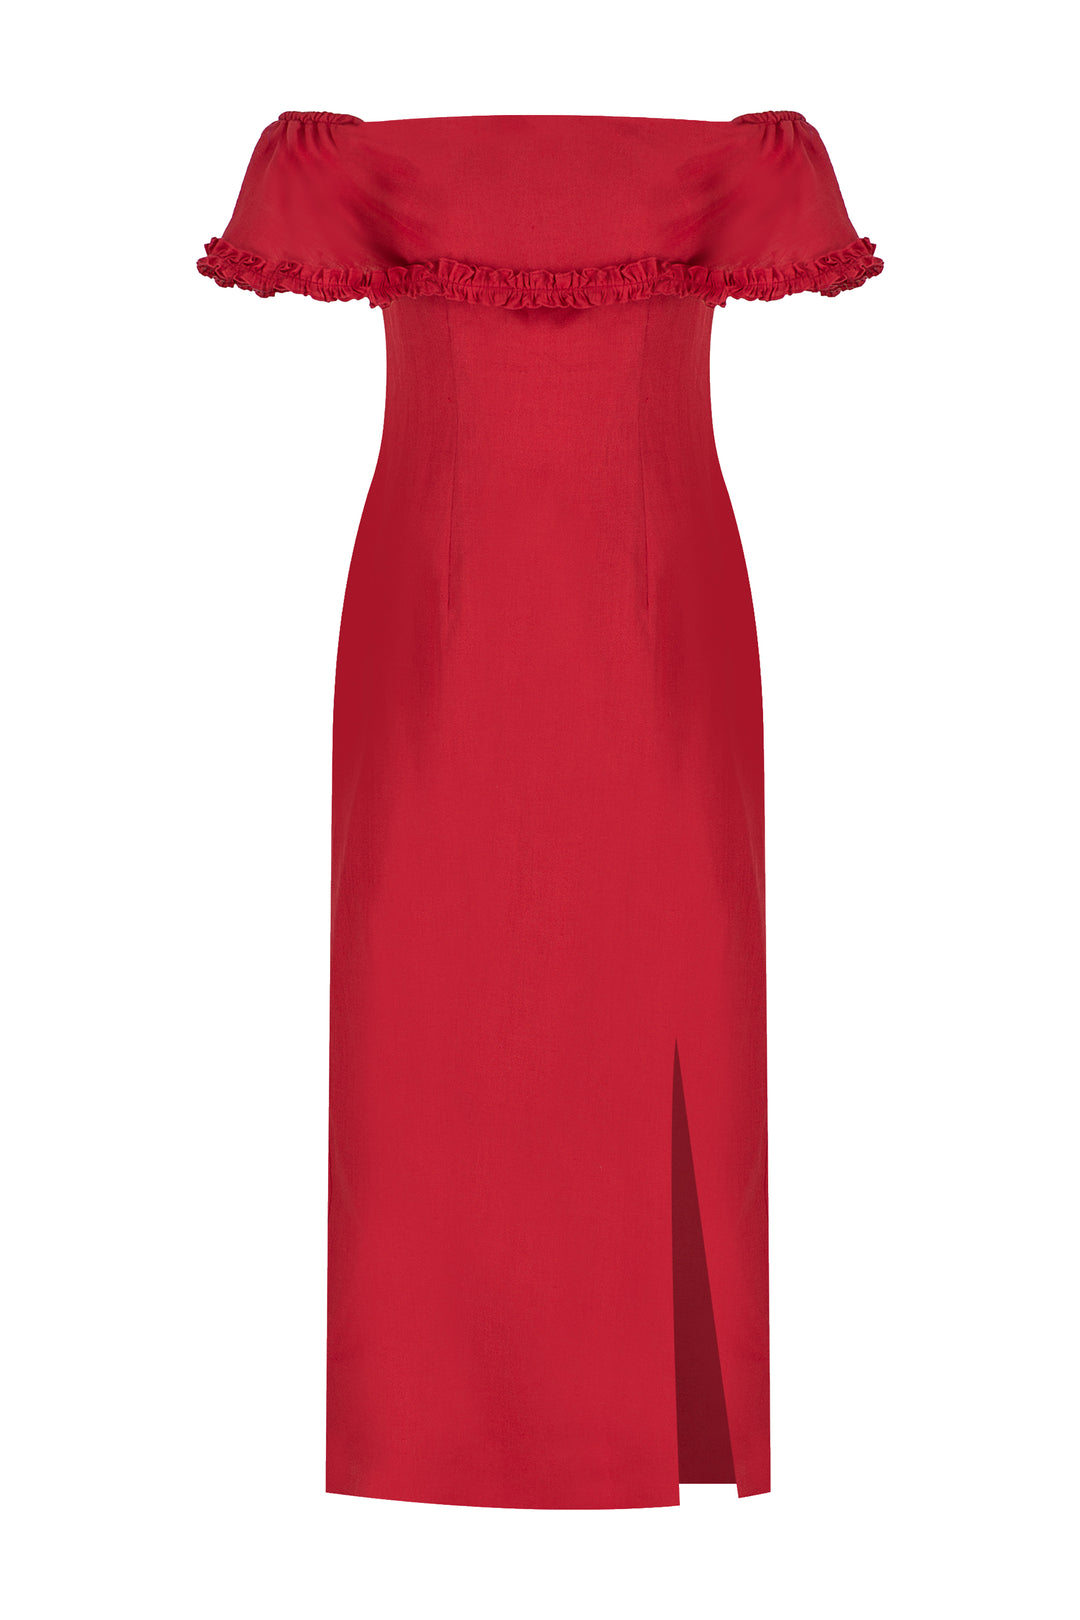 Kırmızı Straplez, Kısa-Kol, Keten Midi Elbise